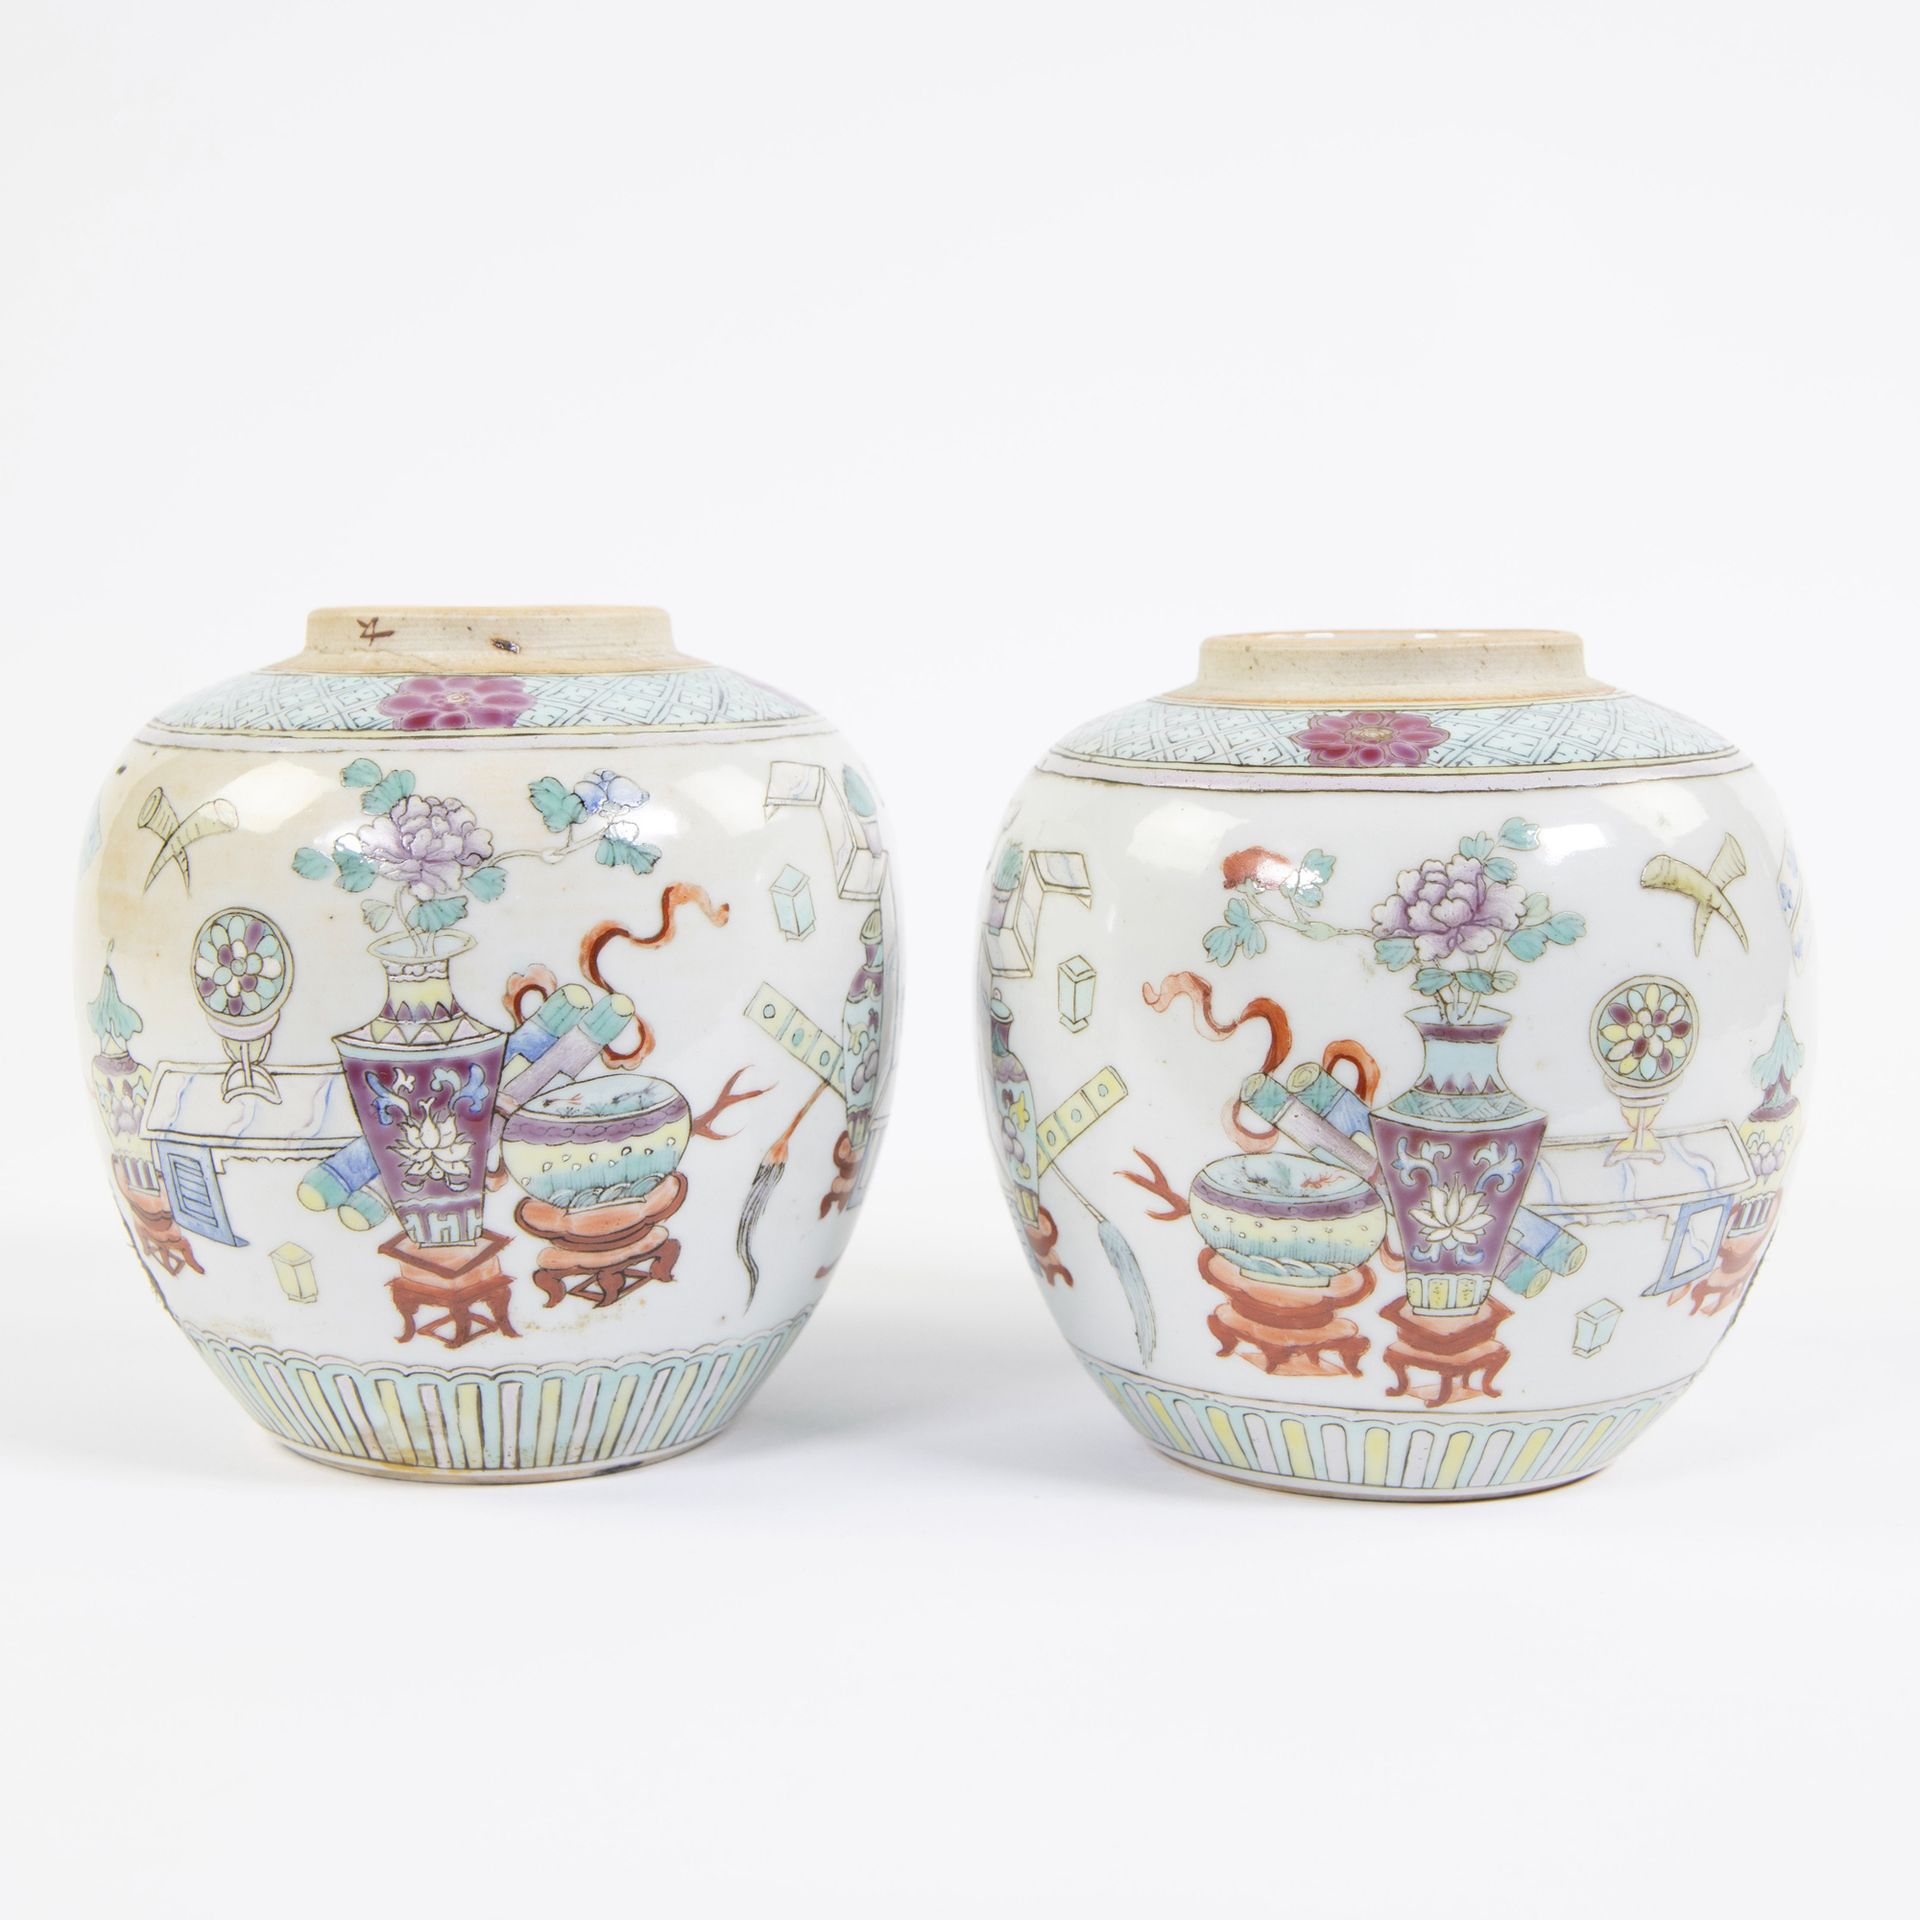 Null 两个瓷罐，用粉彩装饰贵重物品和吉祥物。标有双蓝圈。中国，19世纪末
Twee porseleinen potten, gedecoreerd in f&hellip;